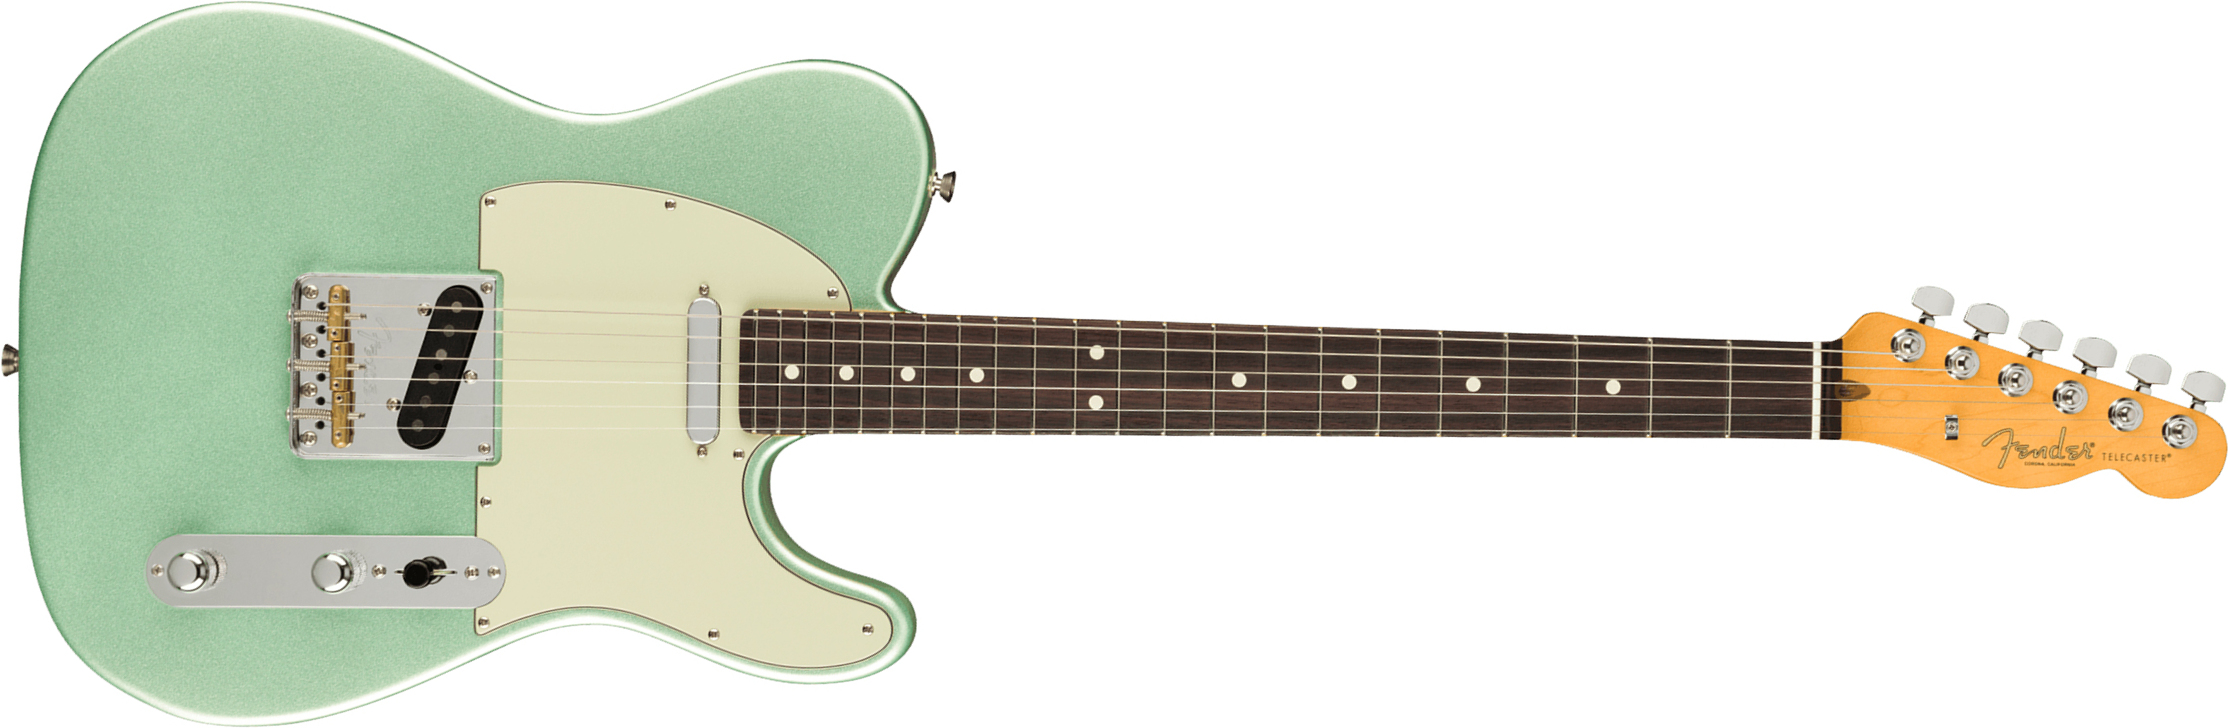 Fender Tele American Professional Ii Usa Rw - Mystic Surf Green - Tel shape electric guitar - Main picture